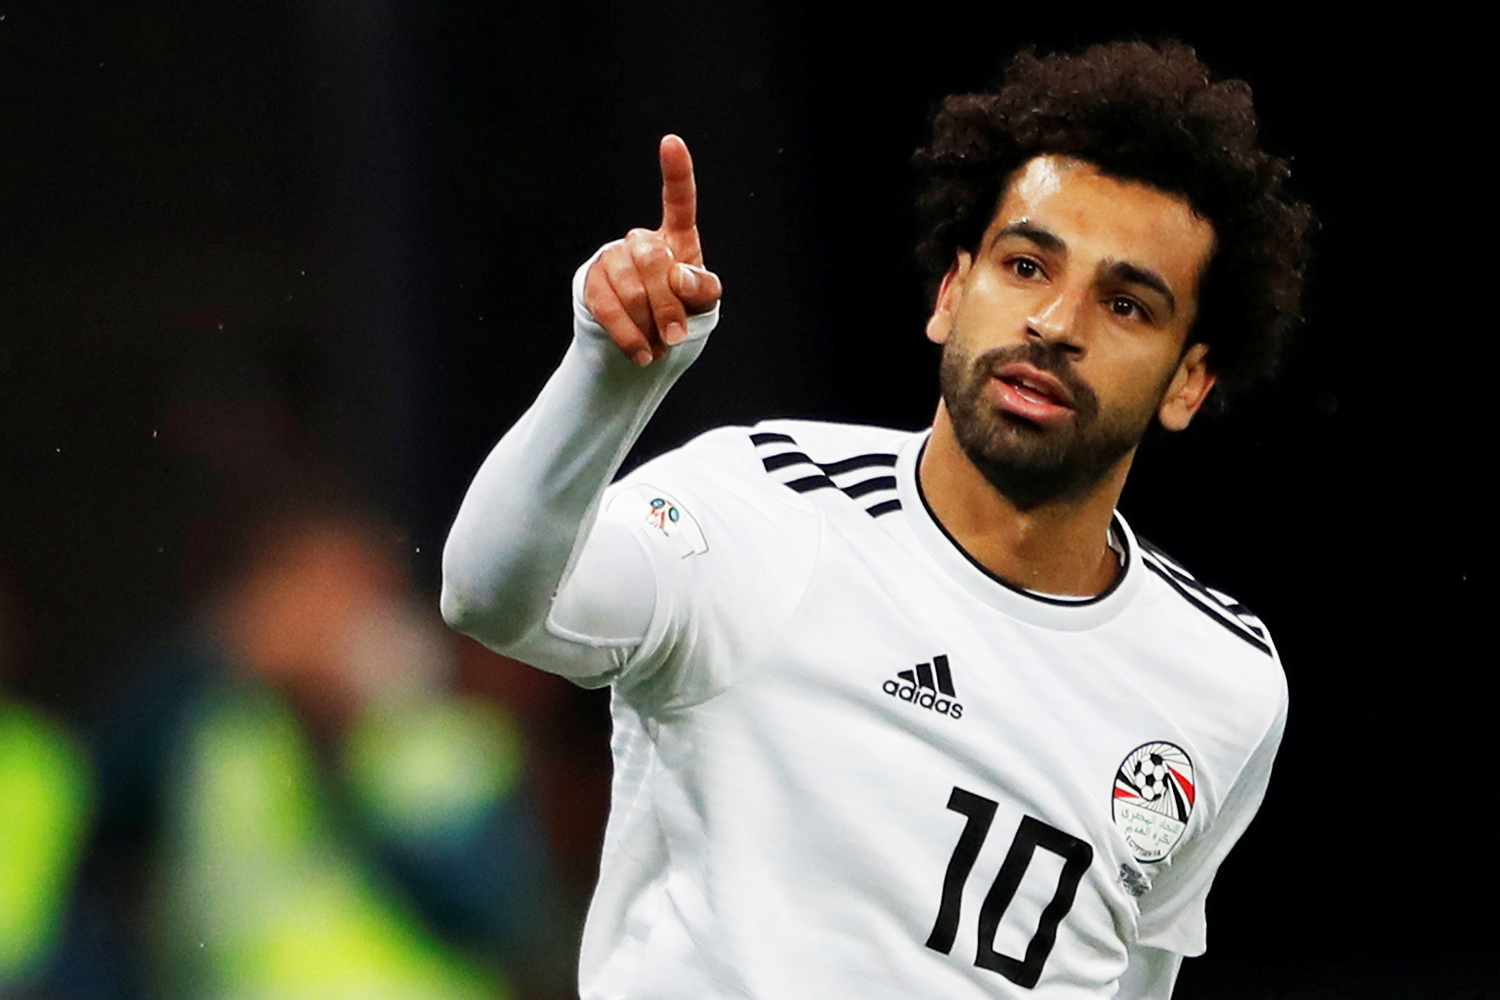 Mohammed Salah comemora após marcar gol de pênalti durante partida entre Rússia e Egito, válida pelo grupo A da Copa do Mundo - 19/06/2018